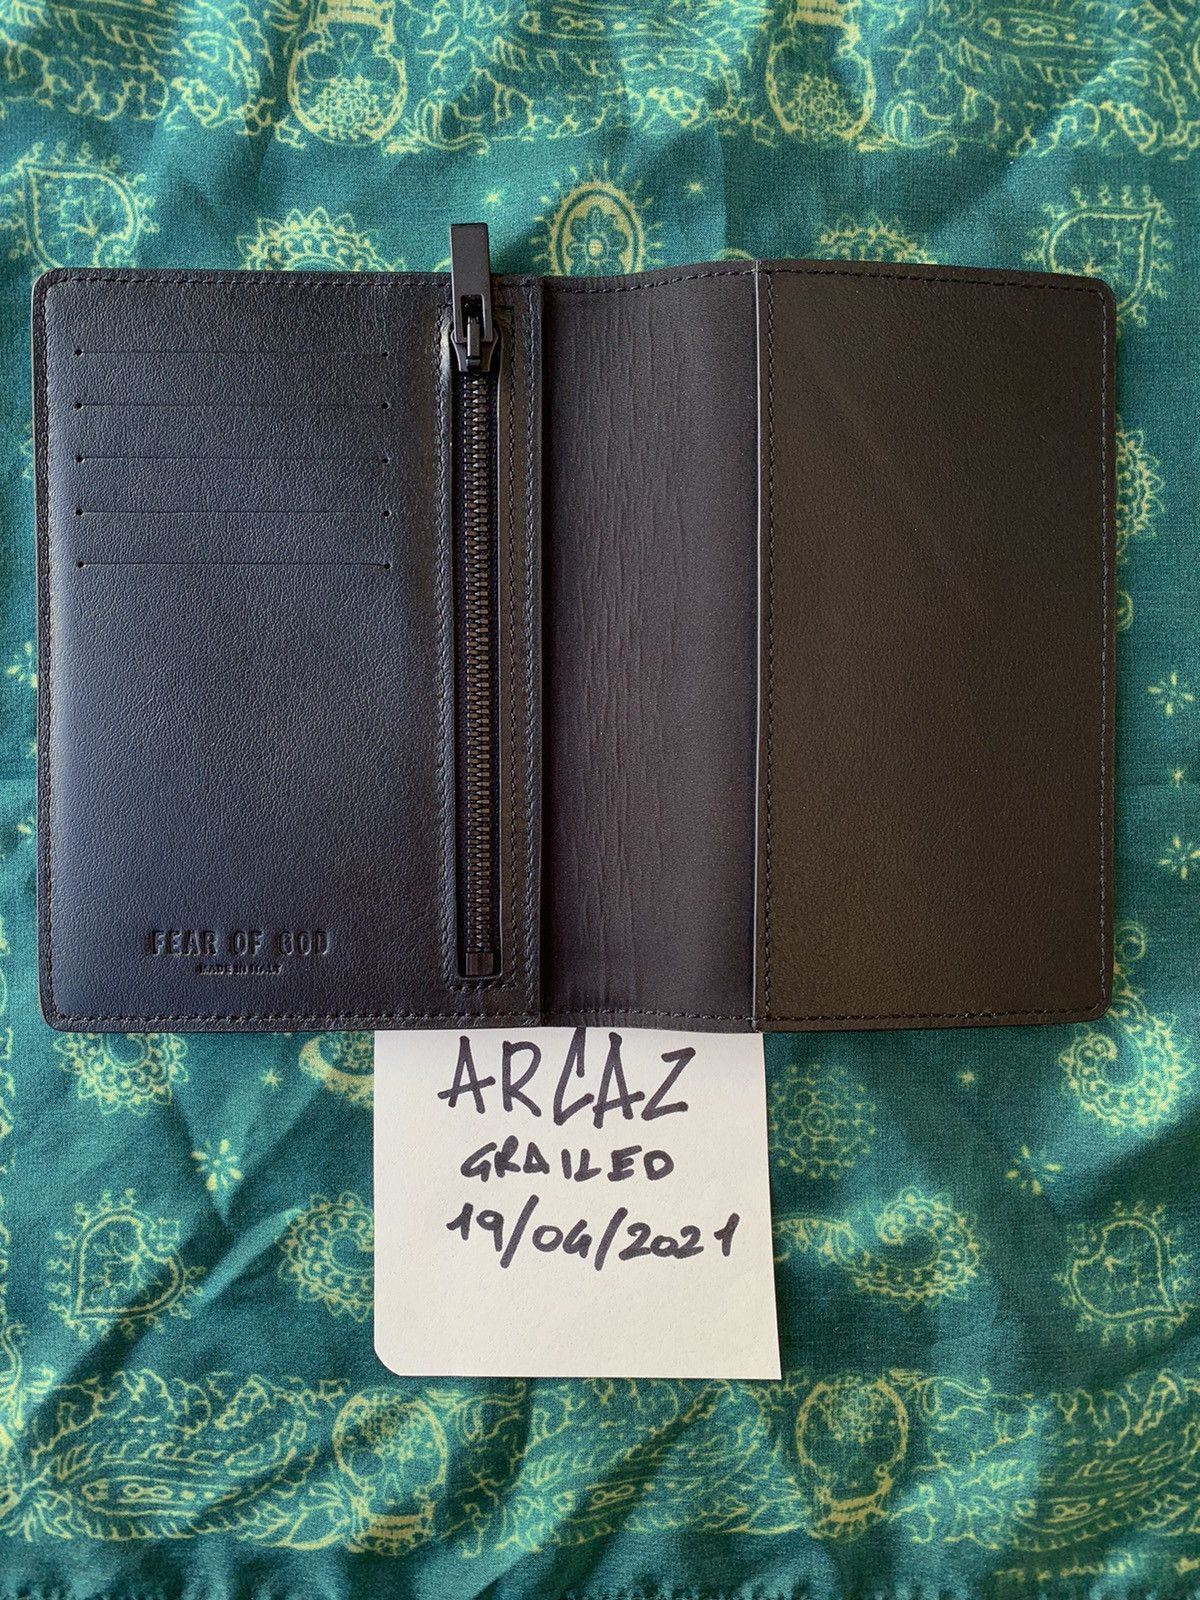 Fear of God Fear of God Passport Wallet black leather | Grailed